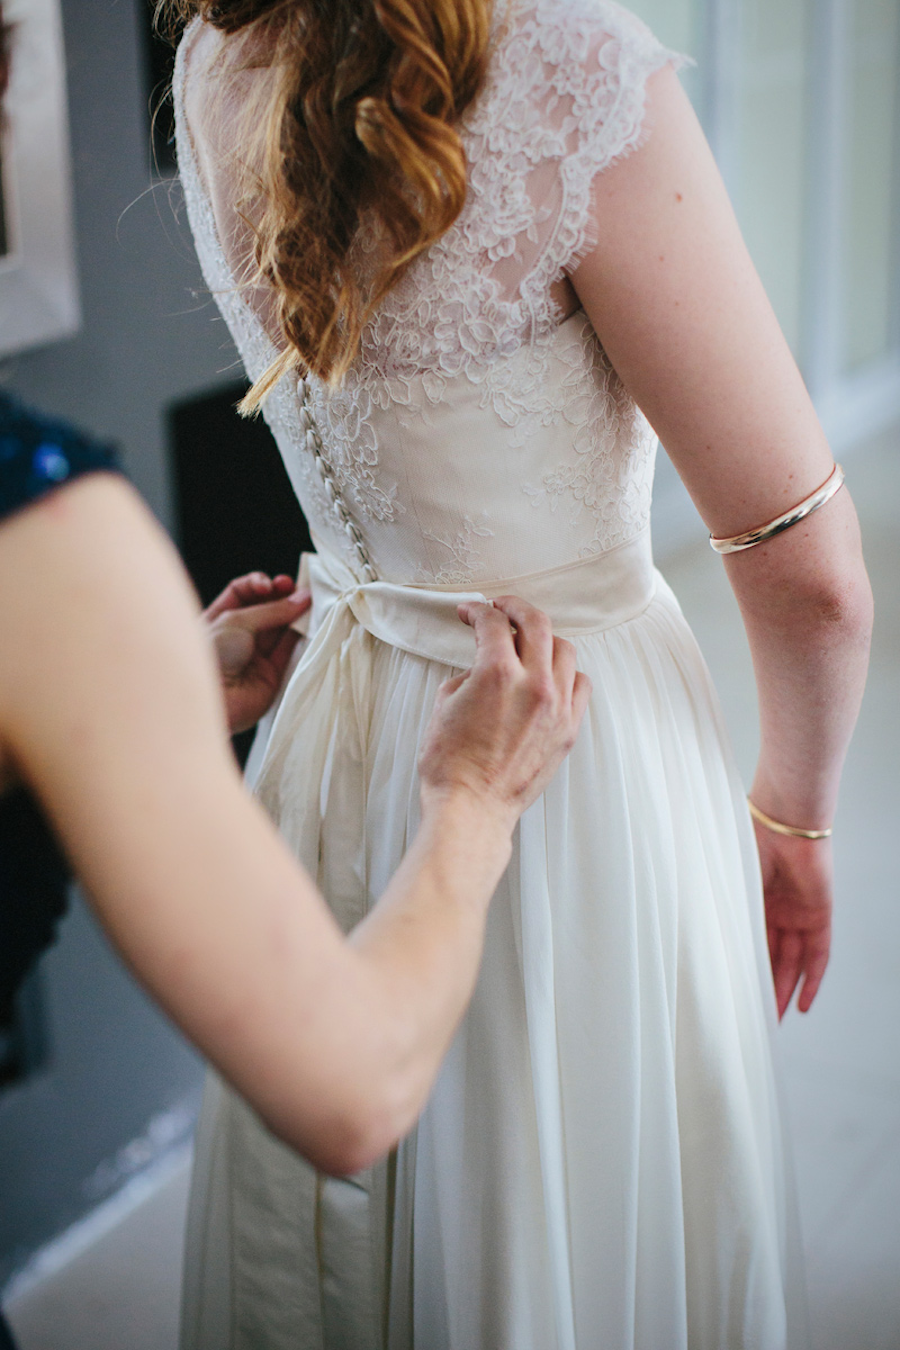 Ashleigh's Wedding Dress with Pockets